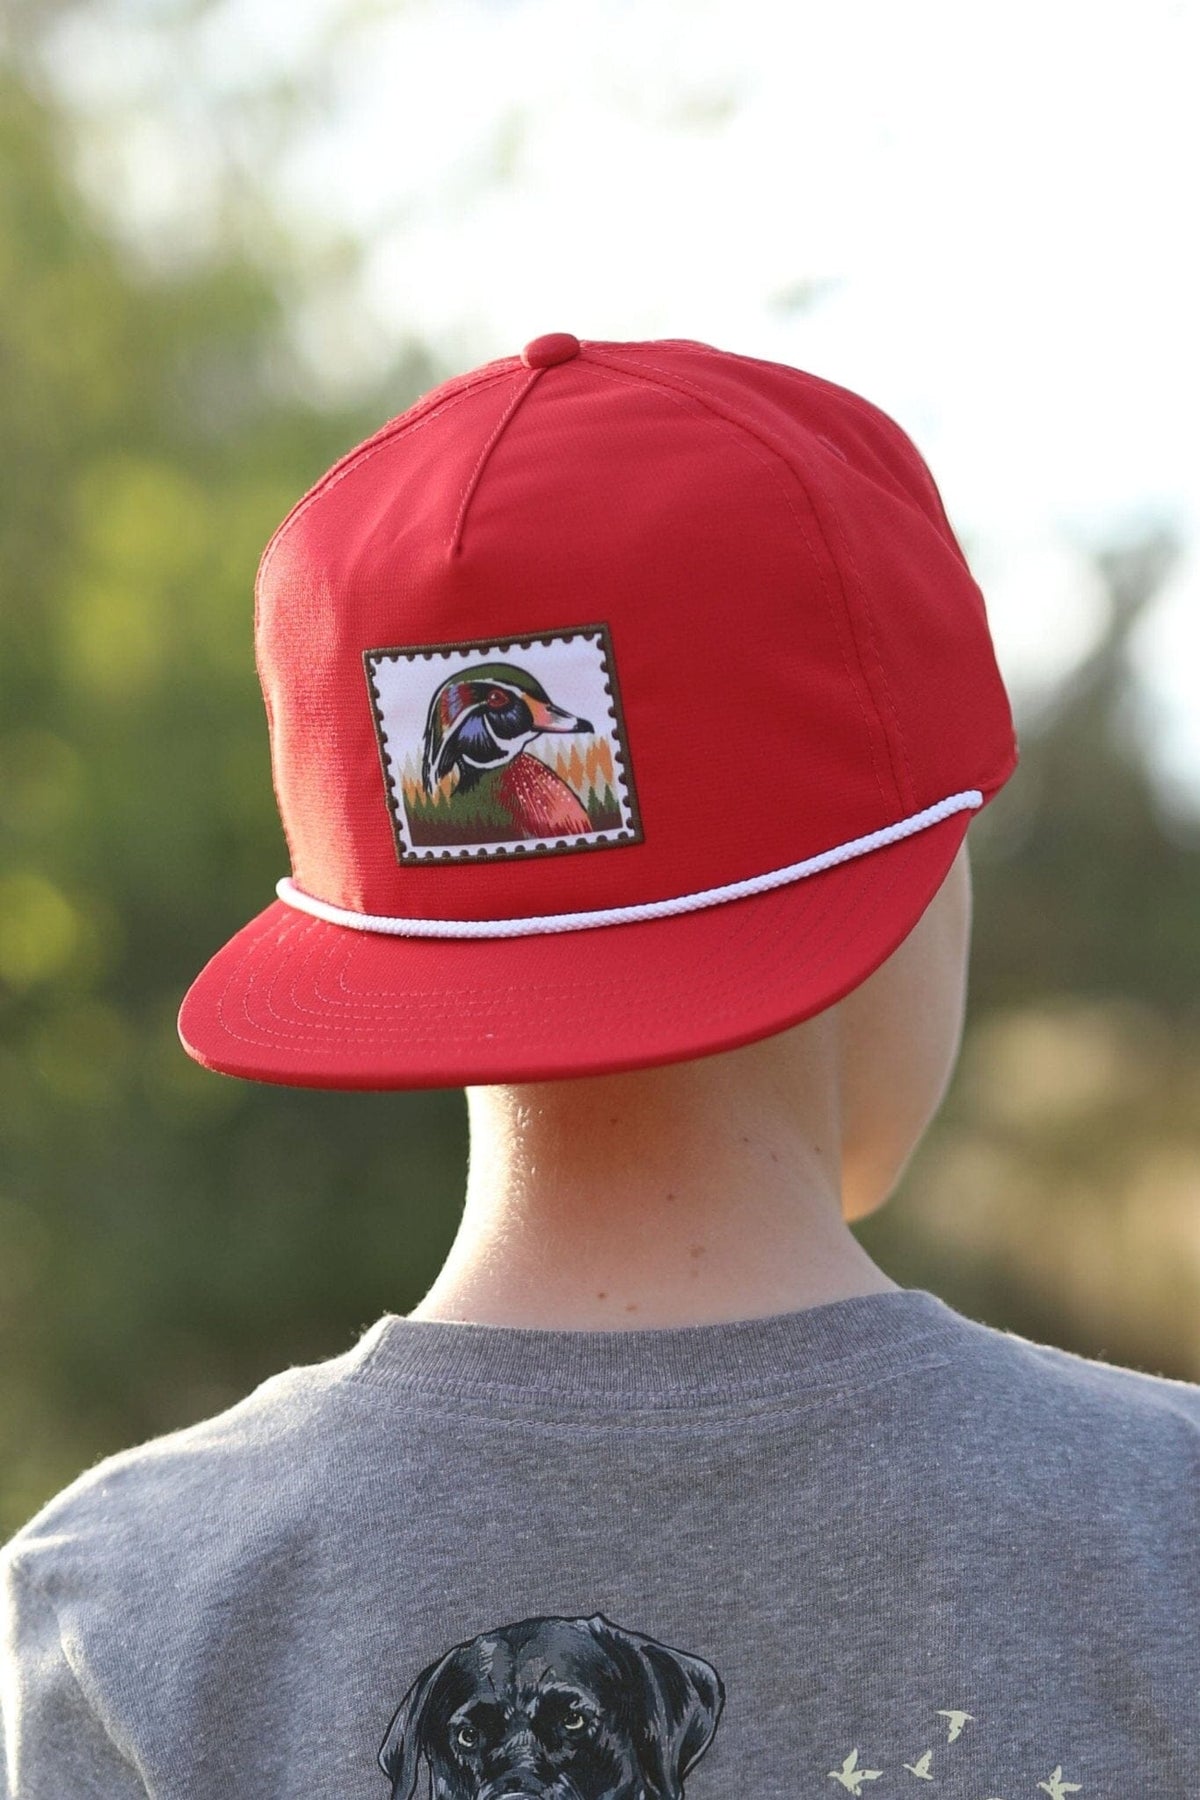 Toddler RedHead Camo Adjustable Hat Cap Hunting Fishing Kids Boys Girls  Brown